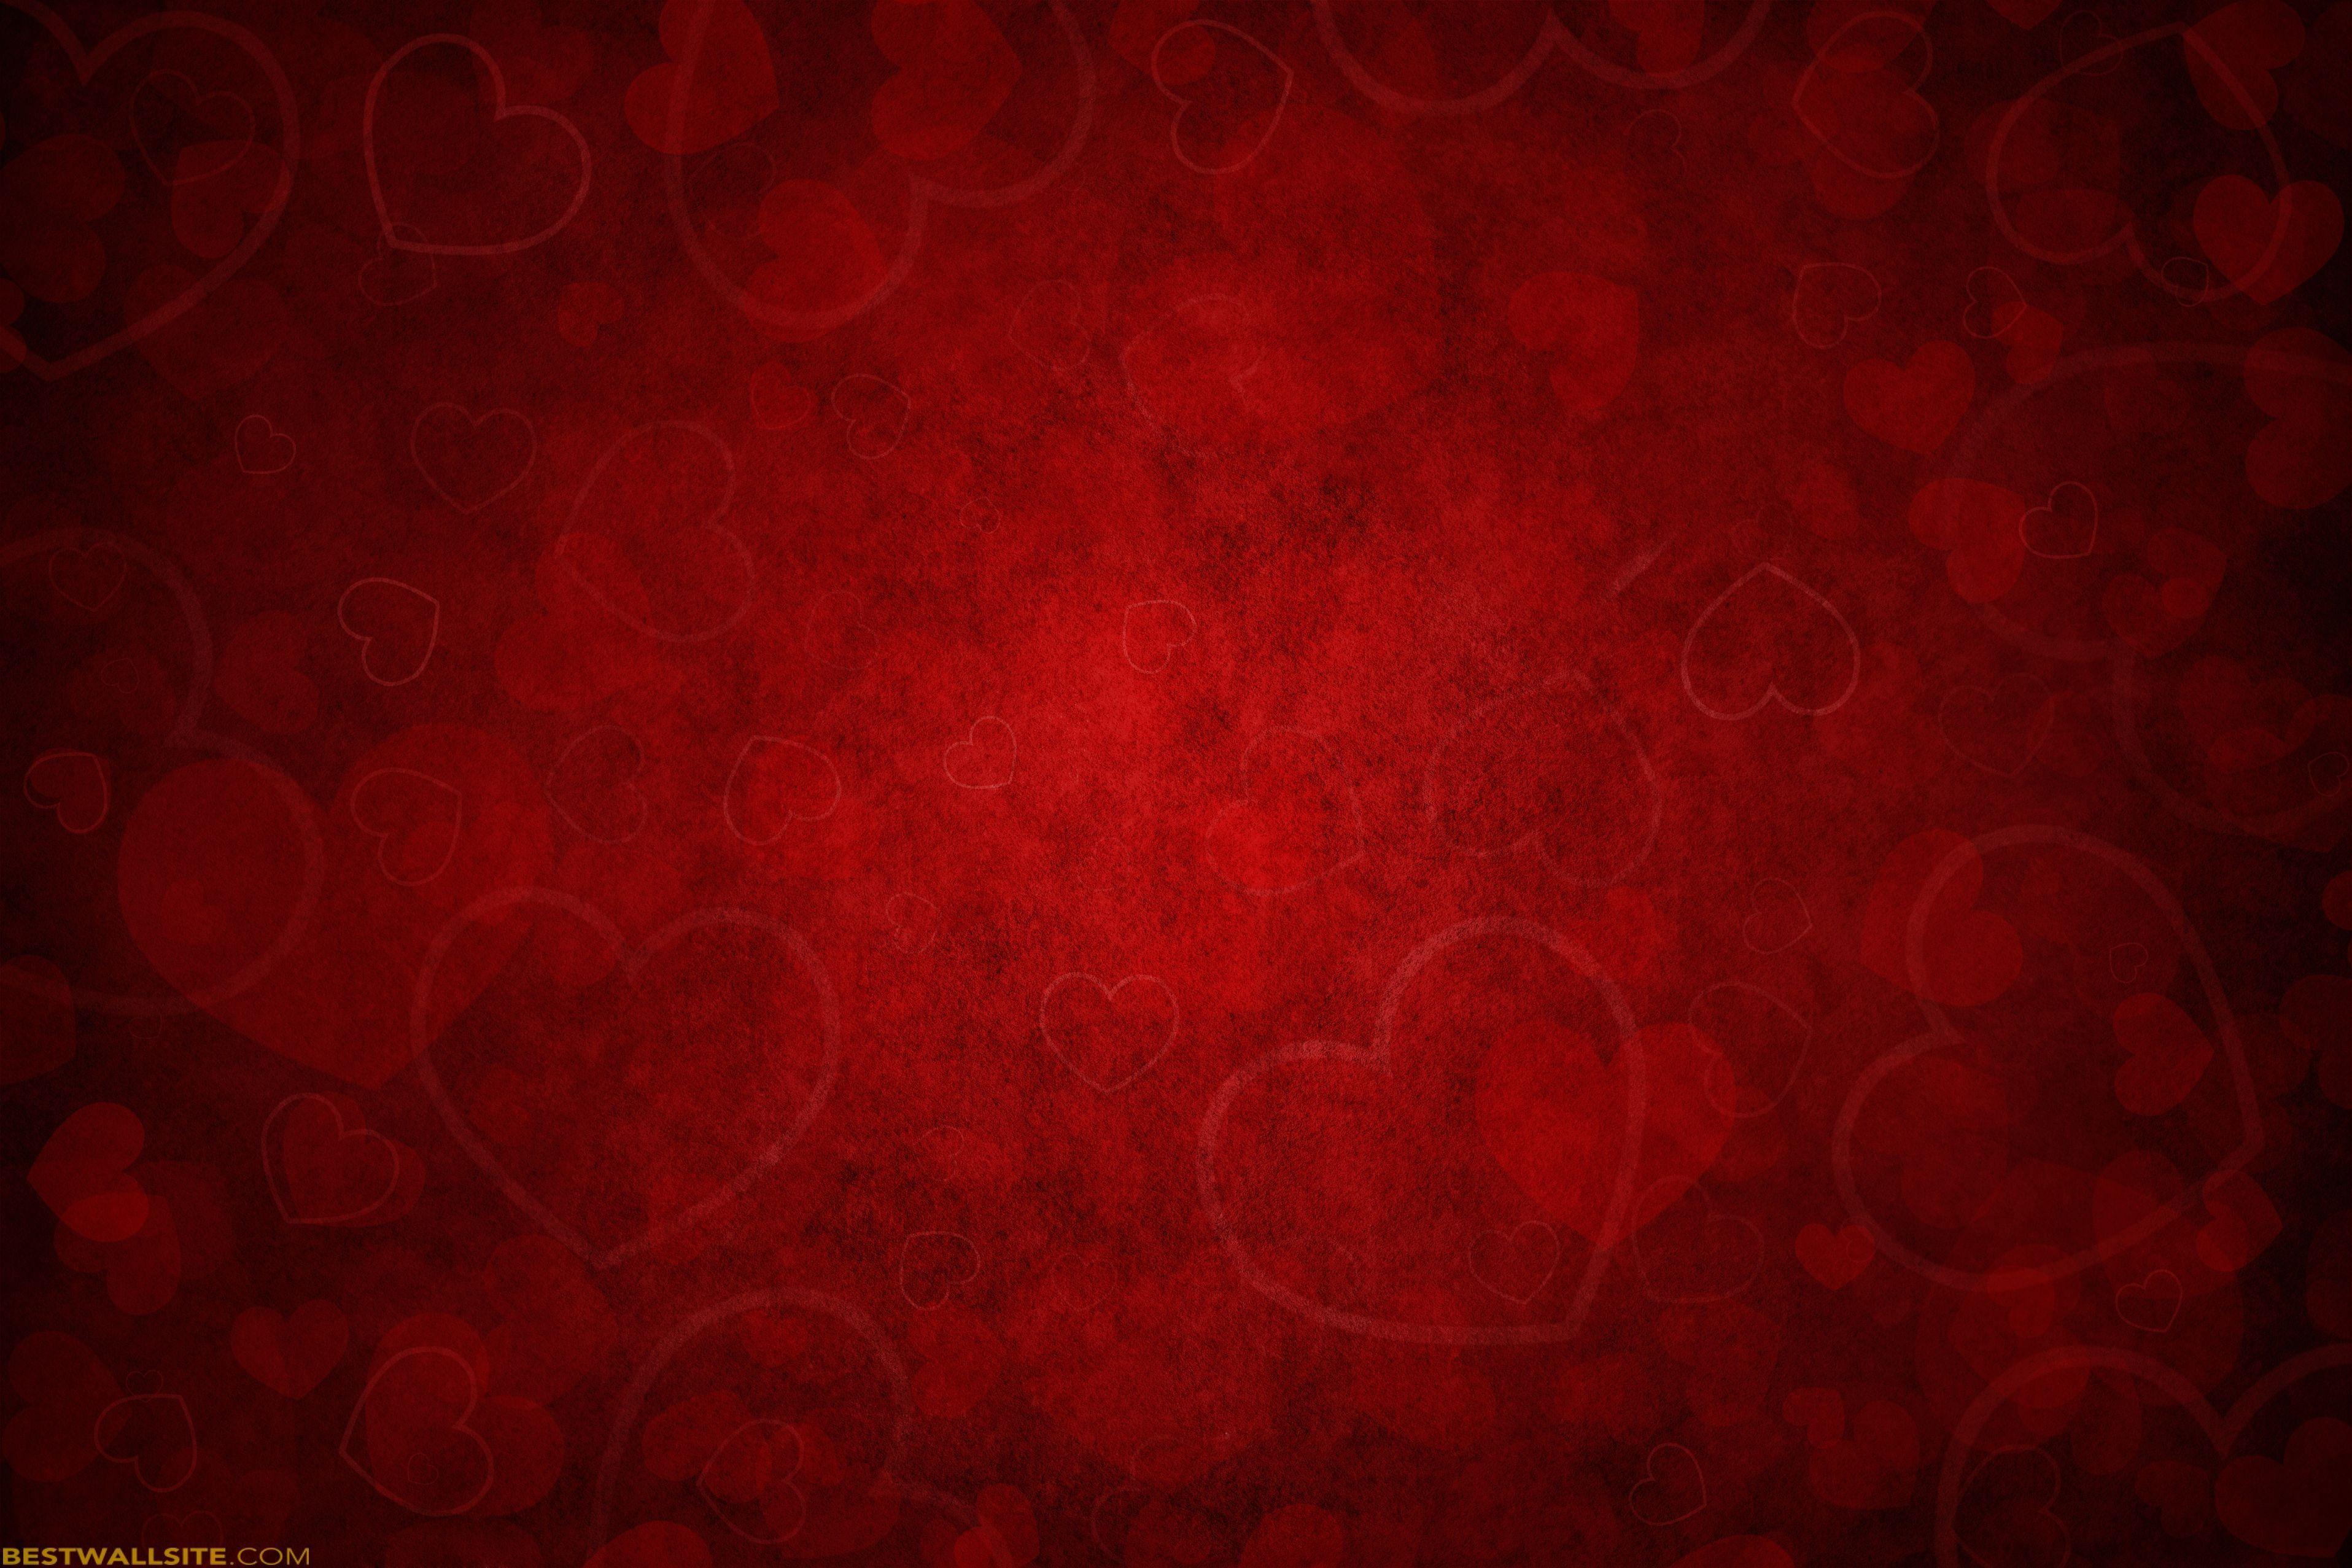 Blood Red Moon Wallpaper BITNOTE. HD Wallpaper. Red